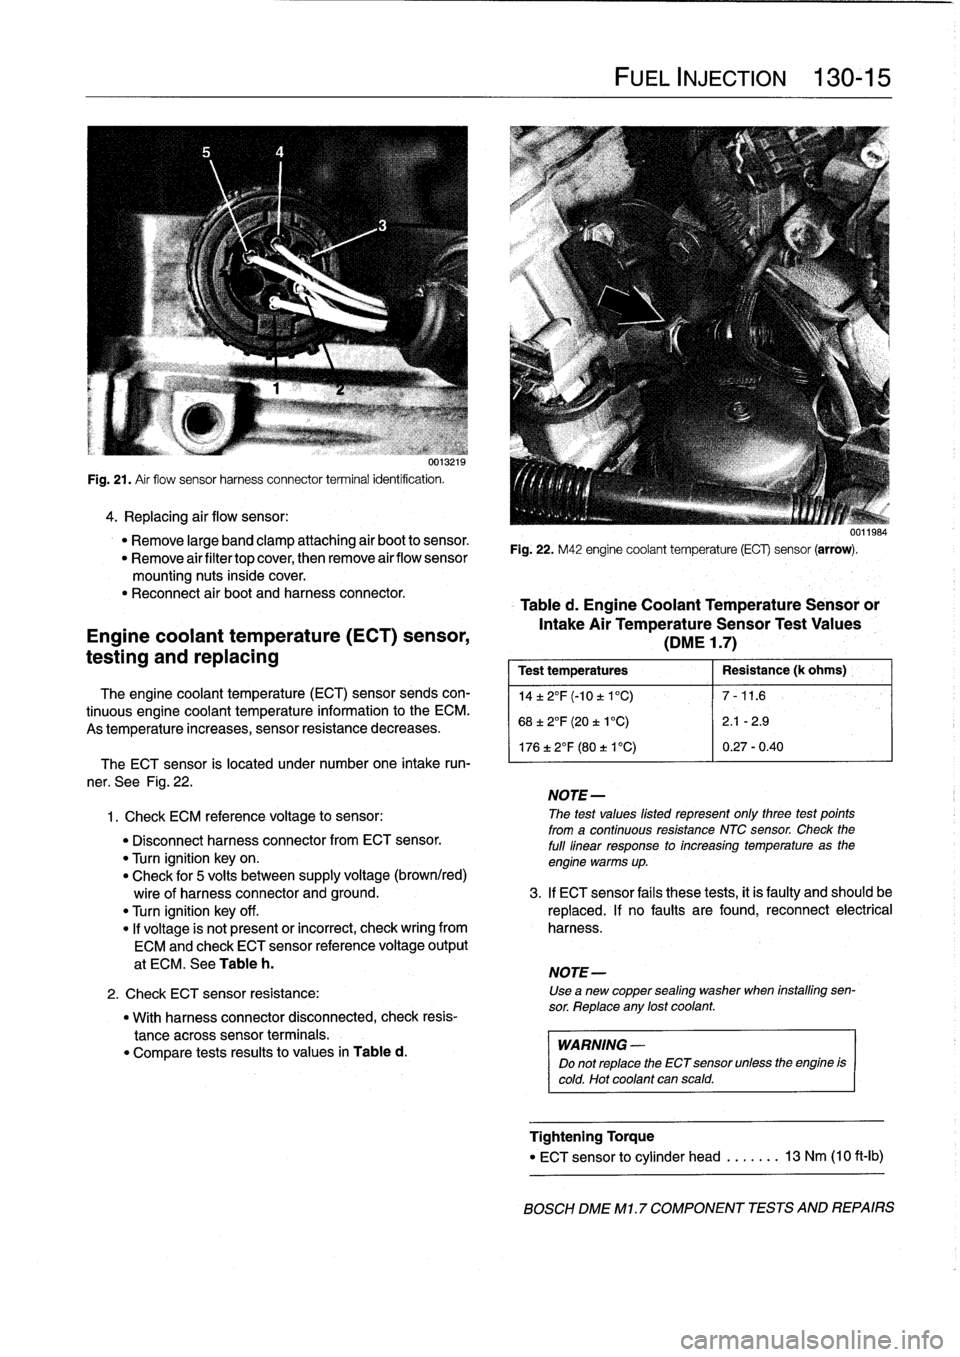 BMW 328i 1997 E36 User Guide u0
I
.[
Ia

Fig
.
21
.
Air
flow
sensor
harness
connector
terminal
identification
.

4
.
Replacing
air
flow
sensor
:

"
Remove
large
band
clamp
attaching
air
boot
to
sensor
.

"
Remove
airfiltertop
cov